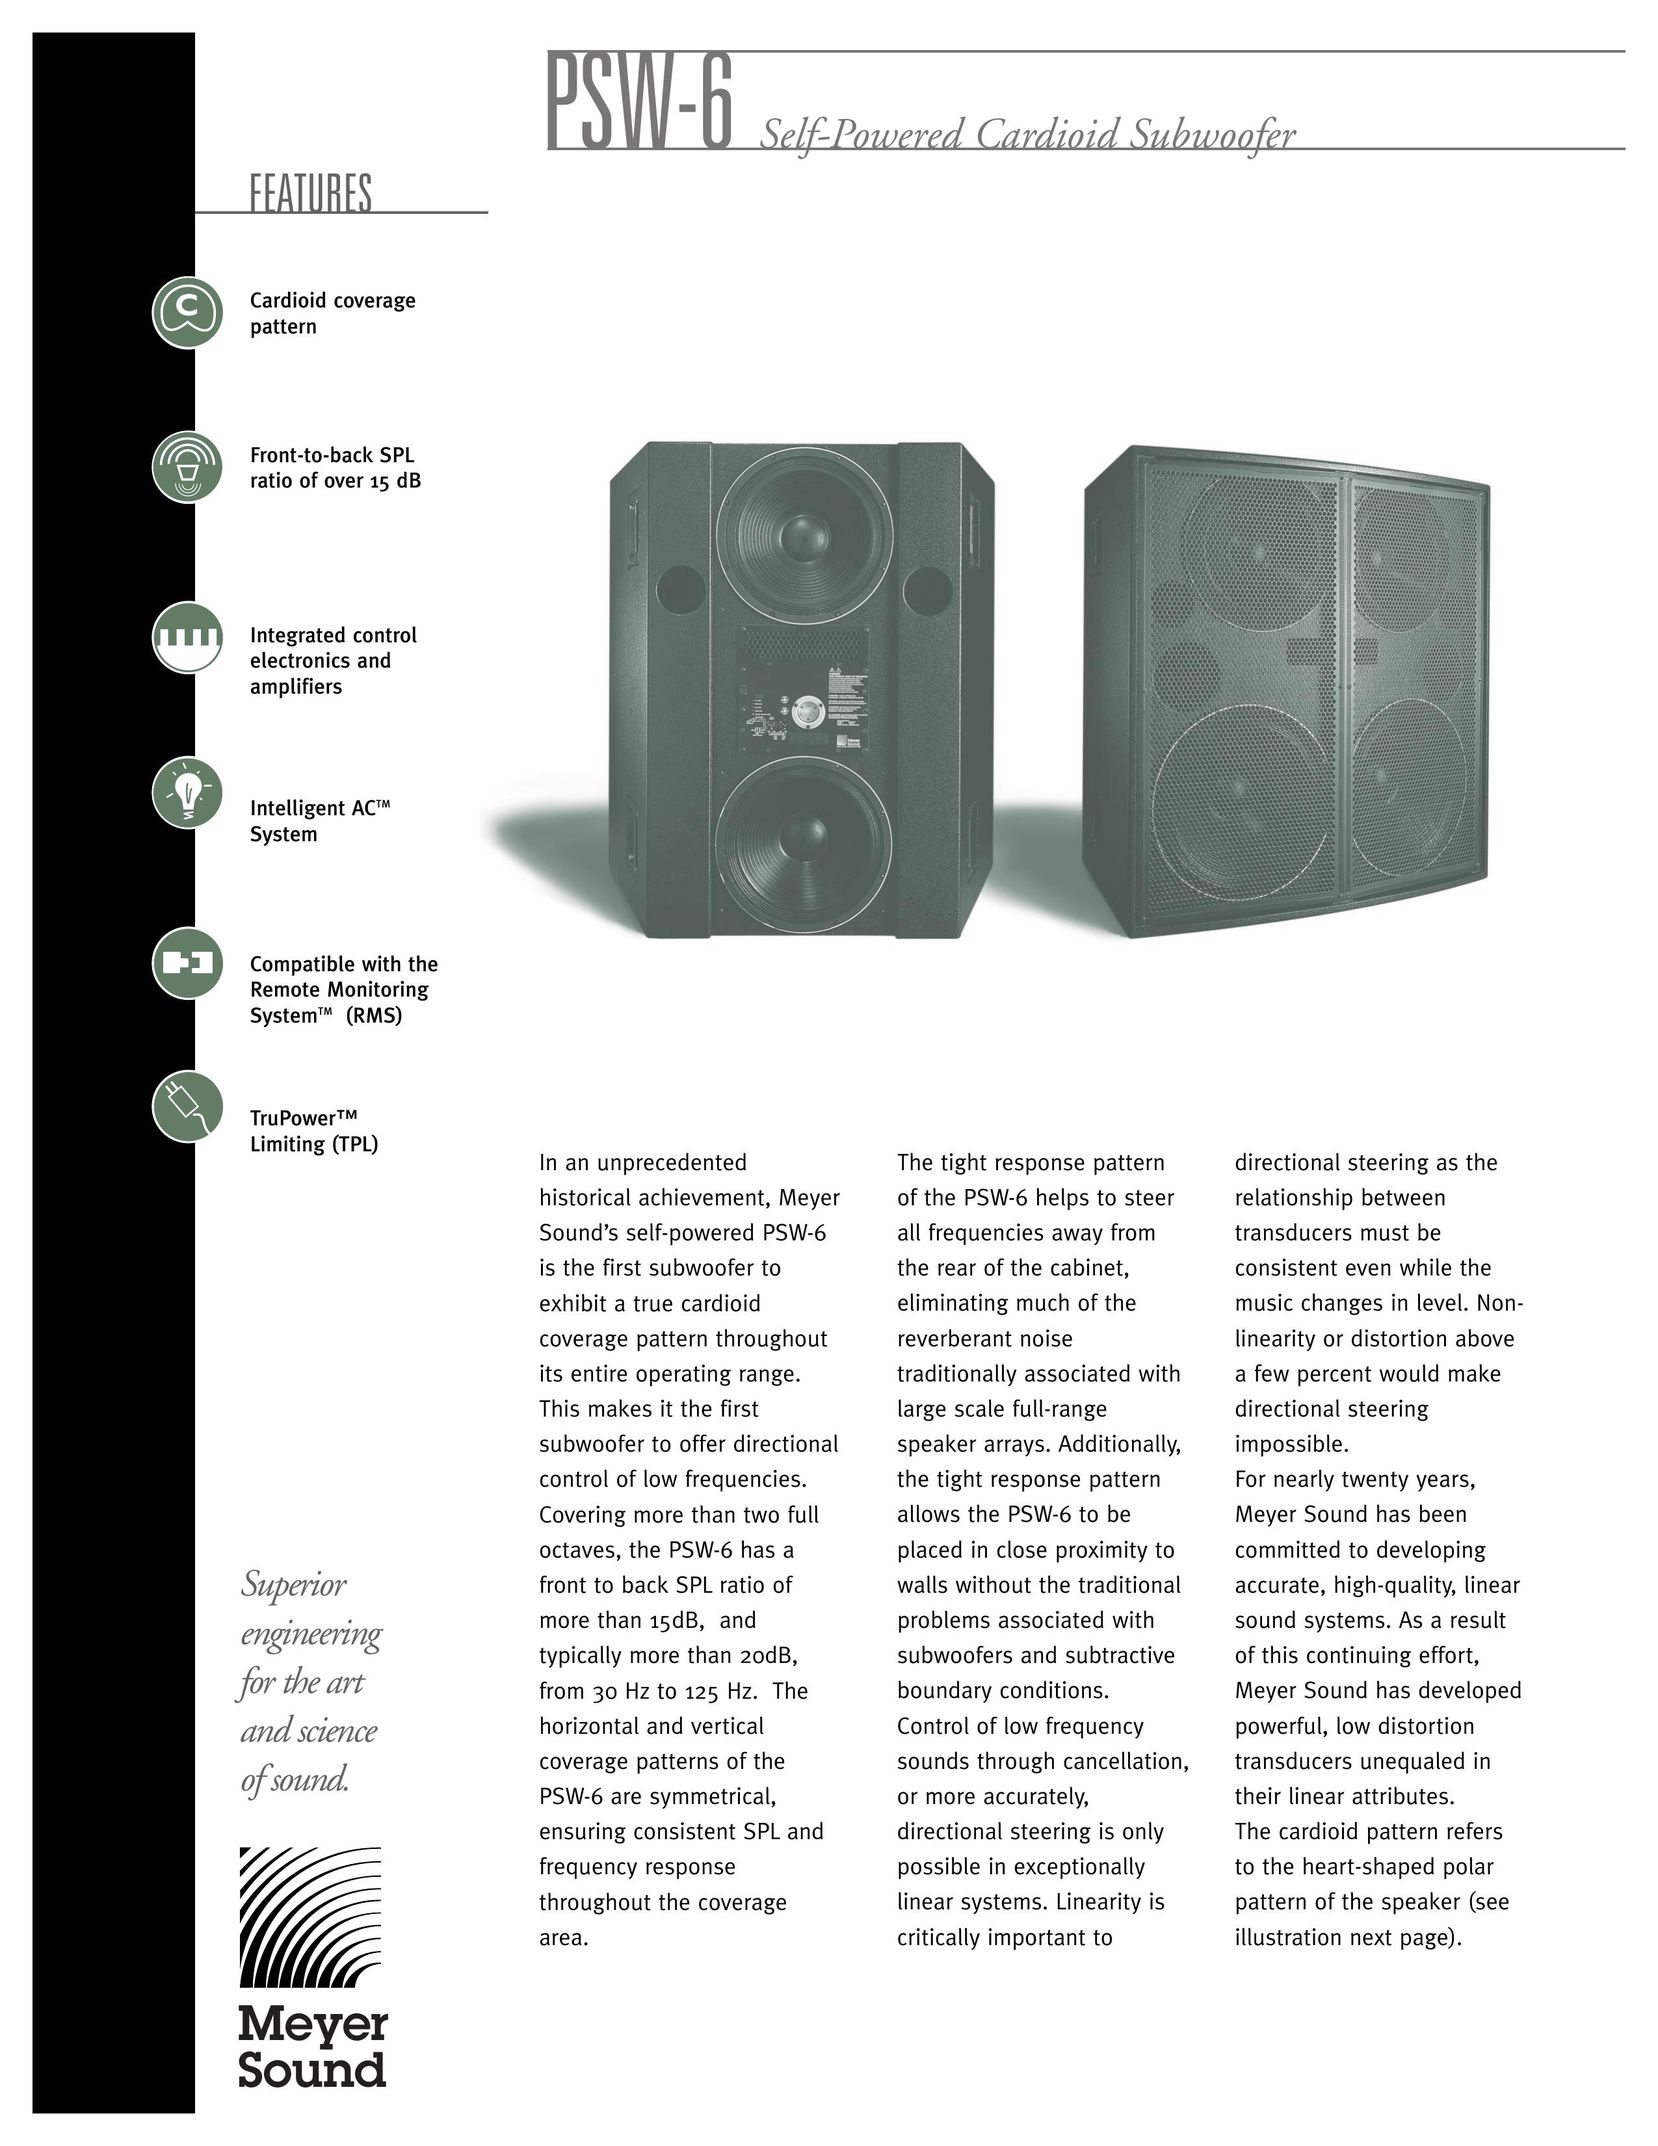 Meyer Sound PSW-6 Speaker User Manual